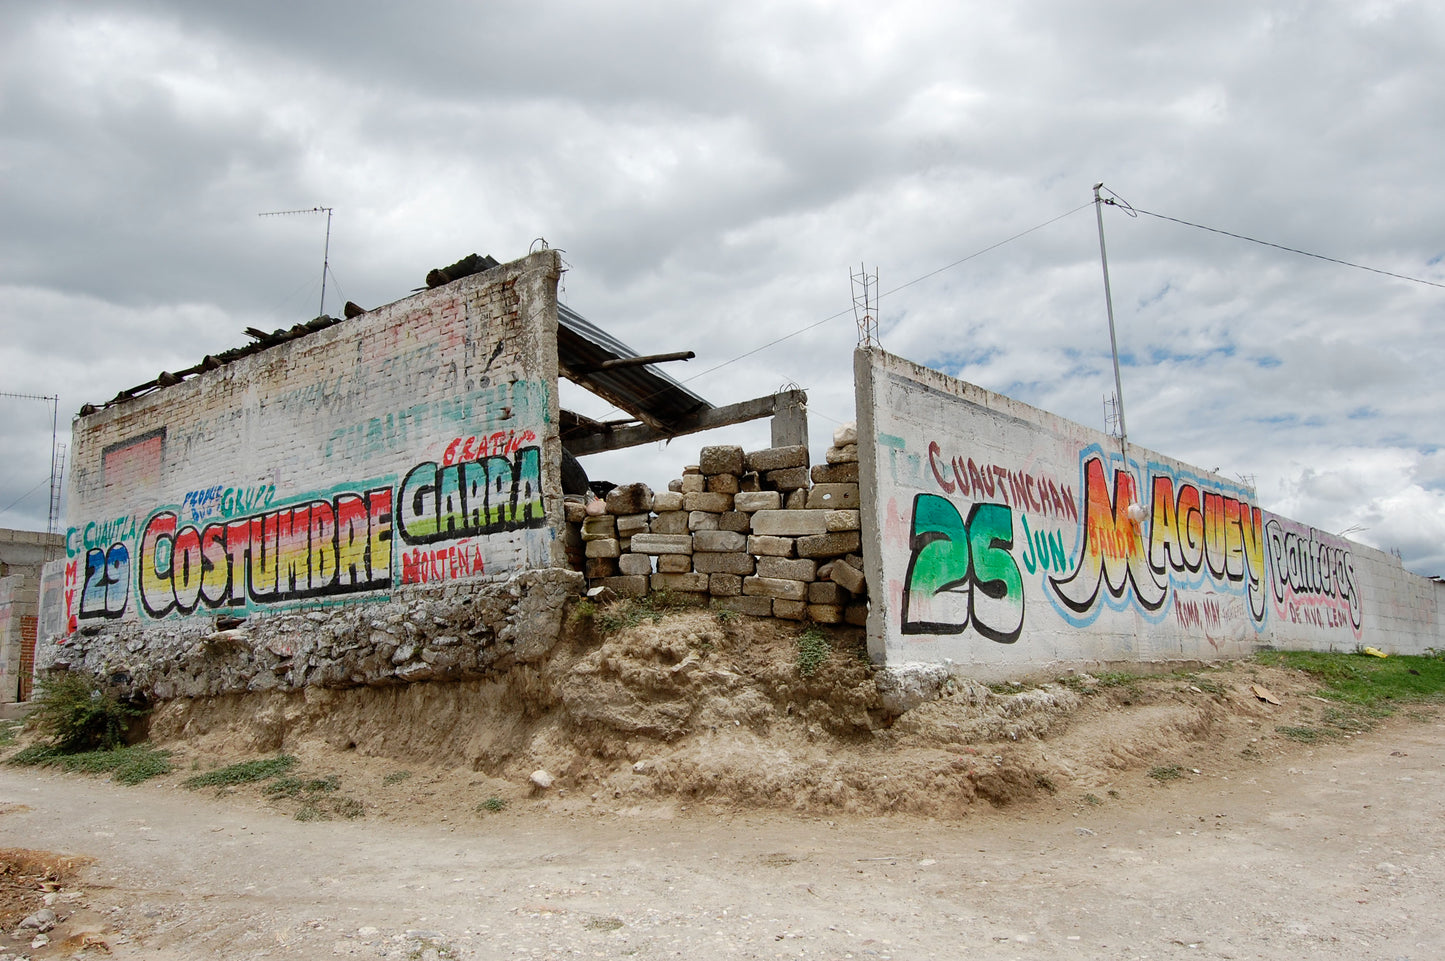 Bardas de Balie: Mexican Wall Painting